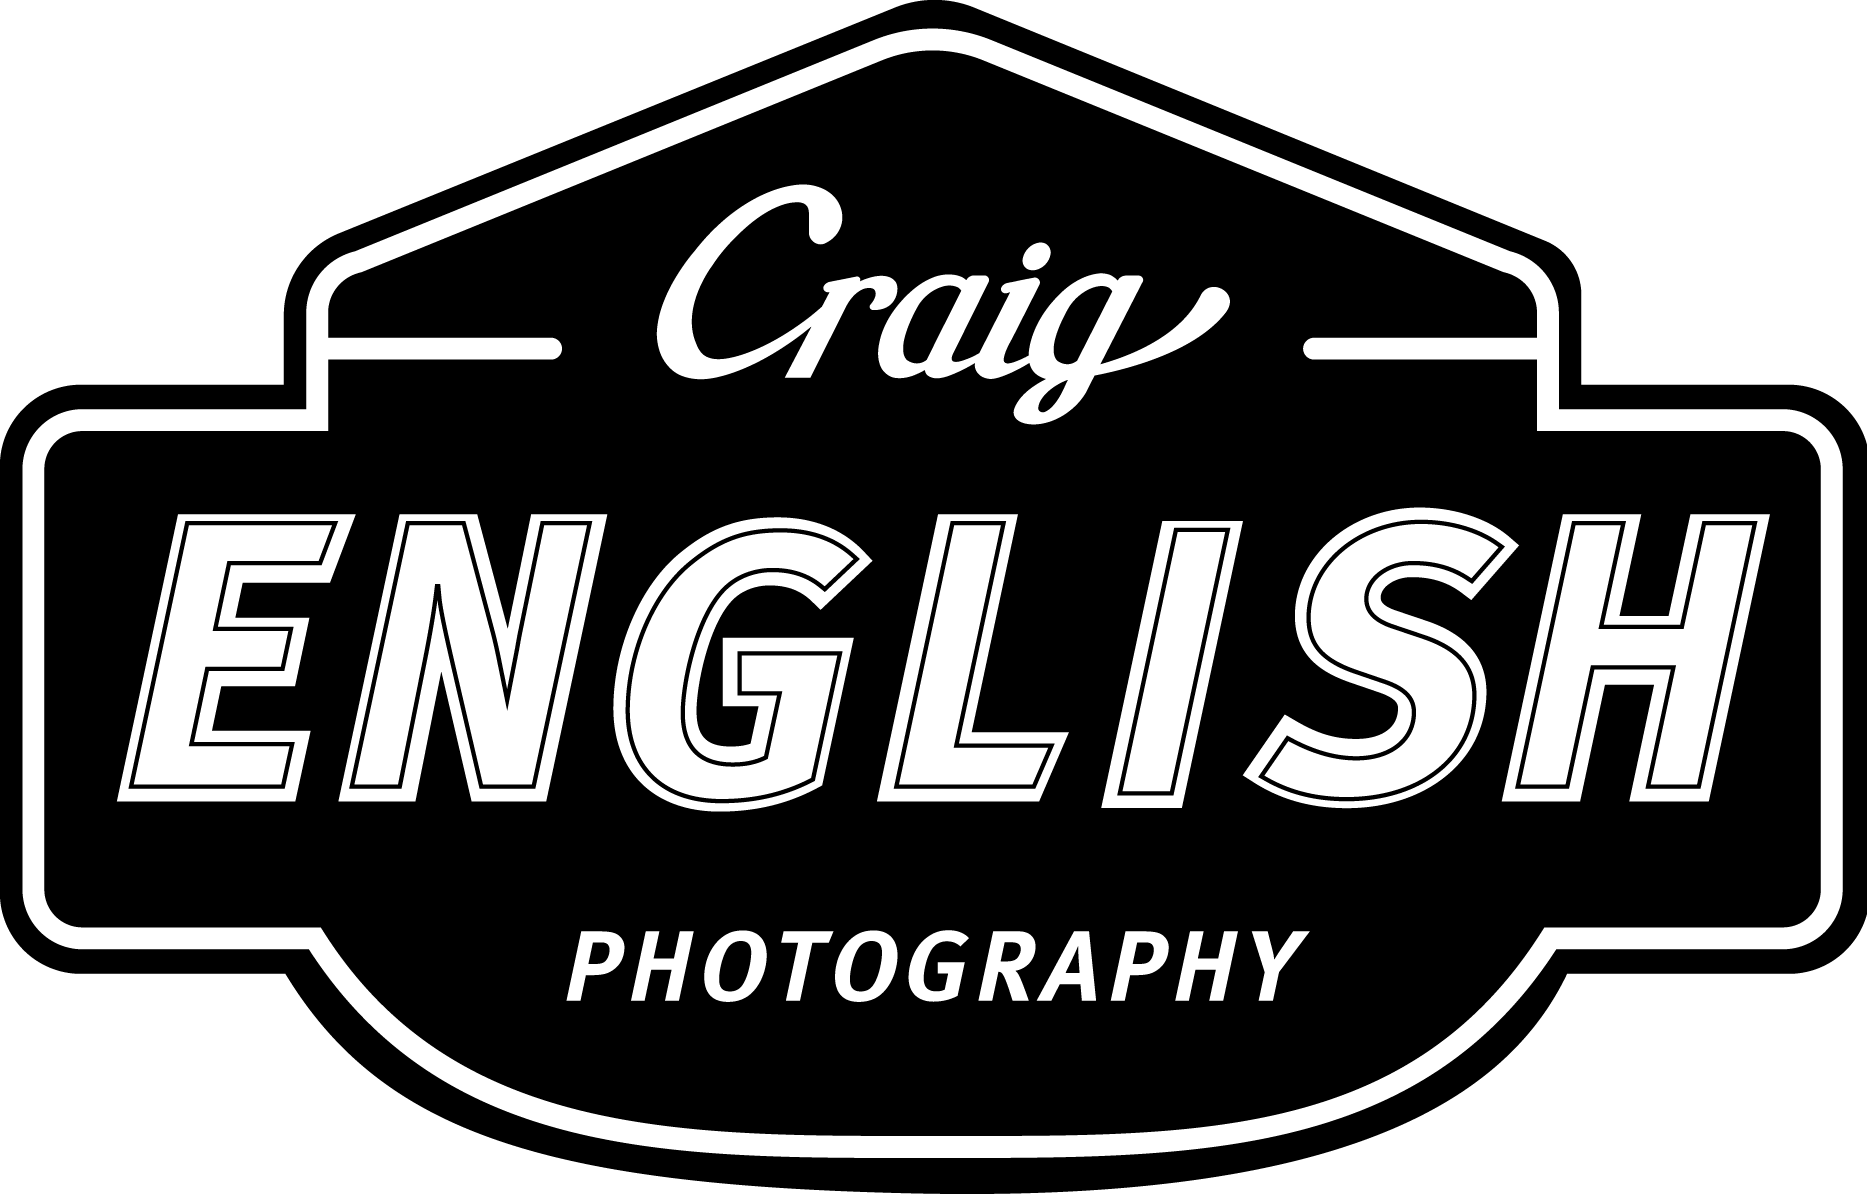 Craig English